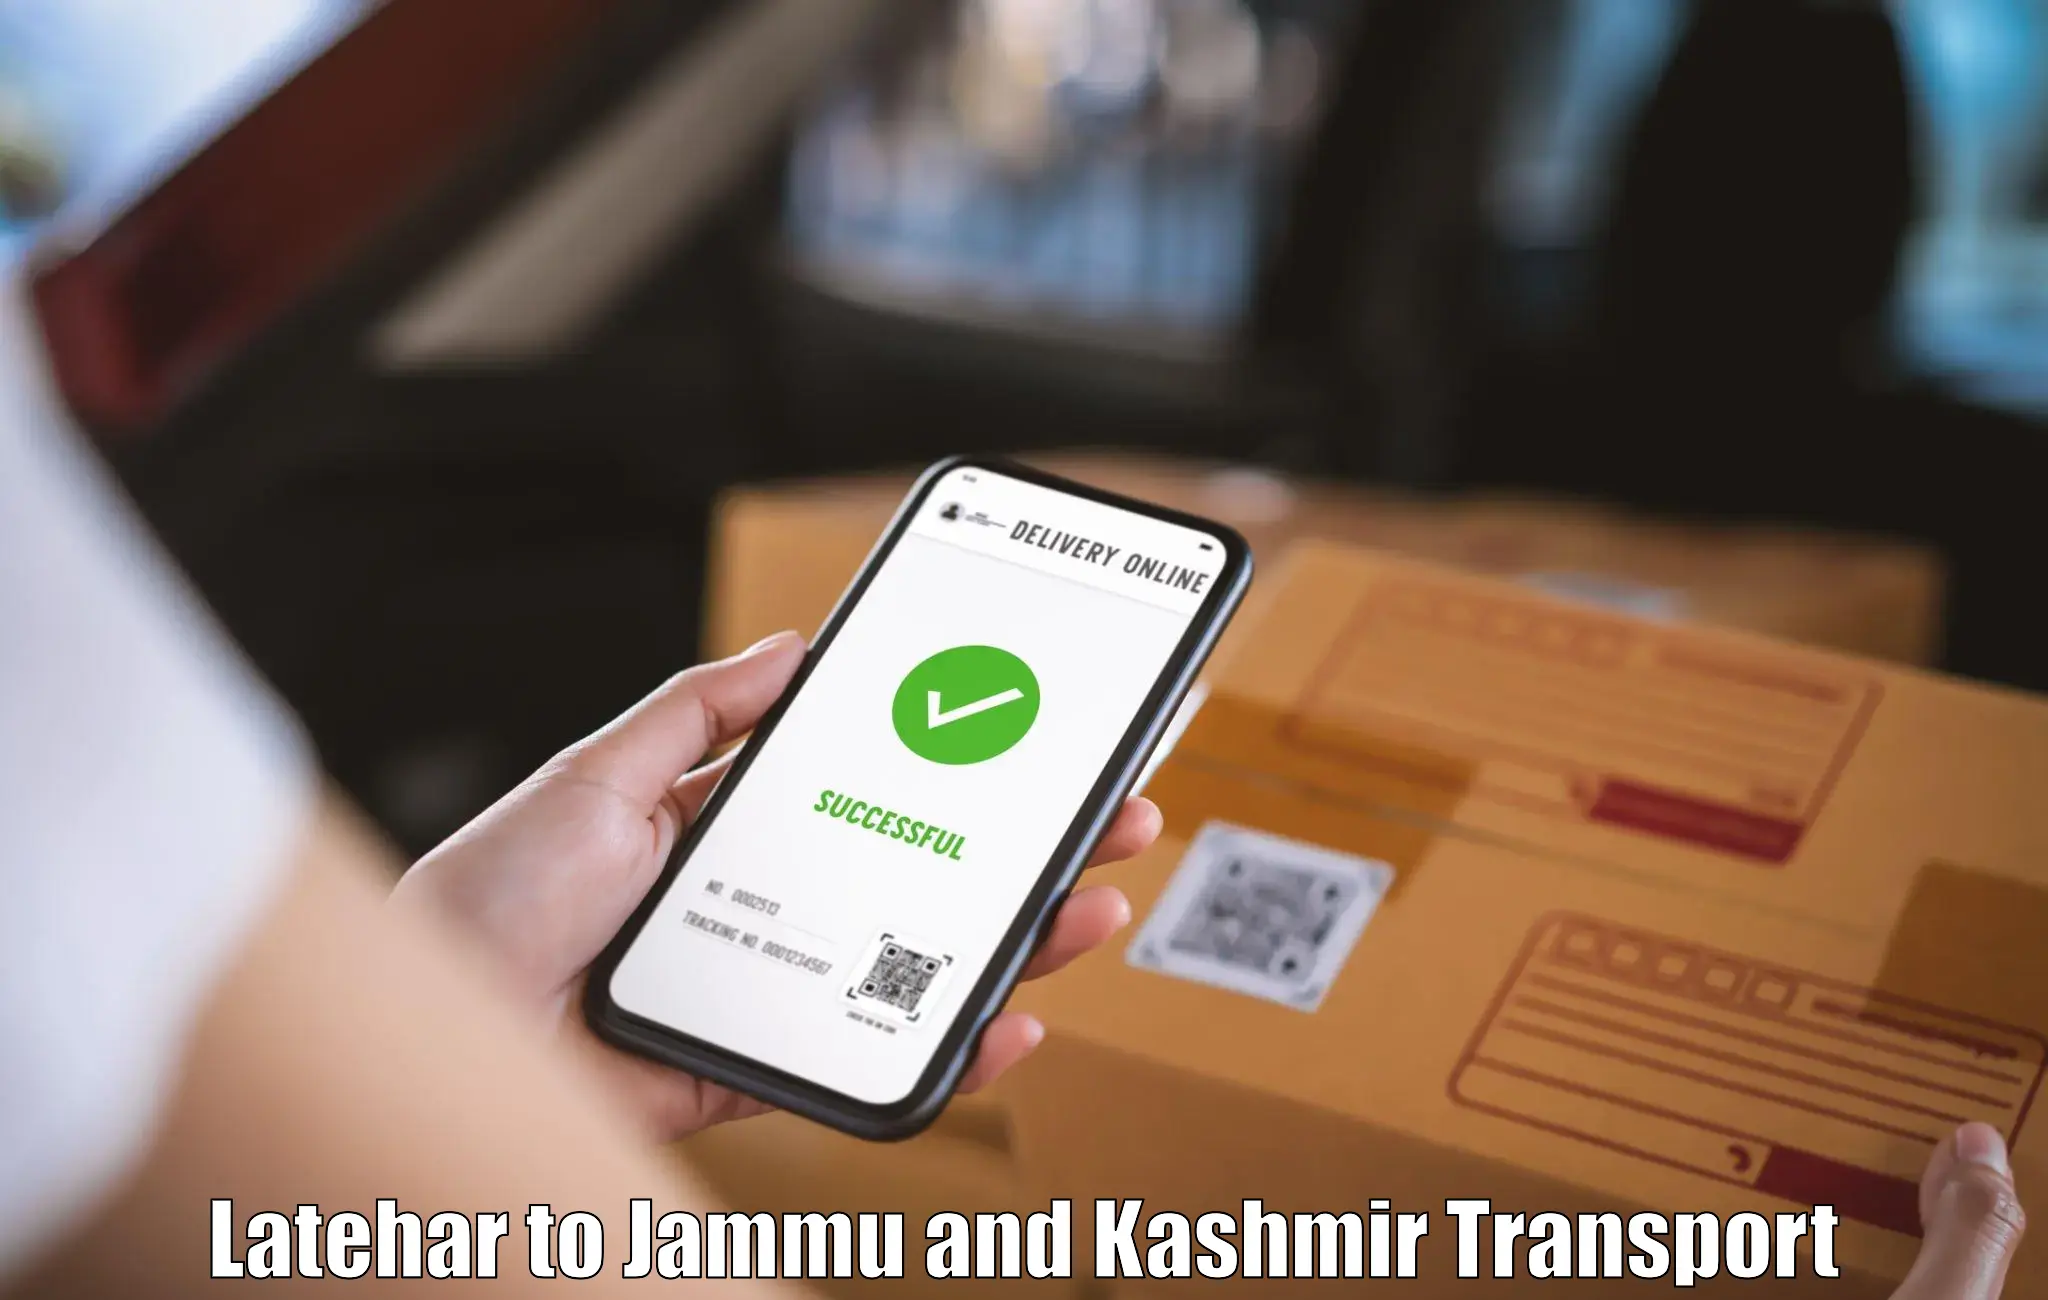 Commercial transport service Latehar to Jammu and Kashmir